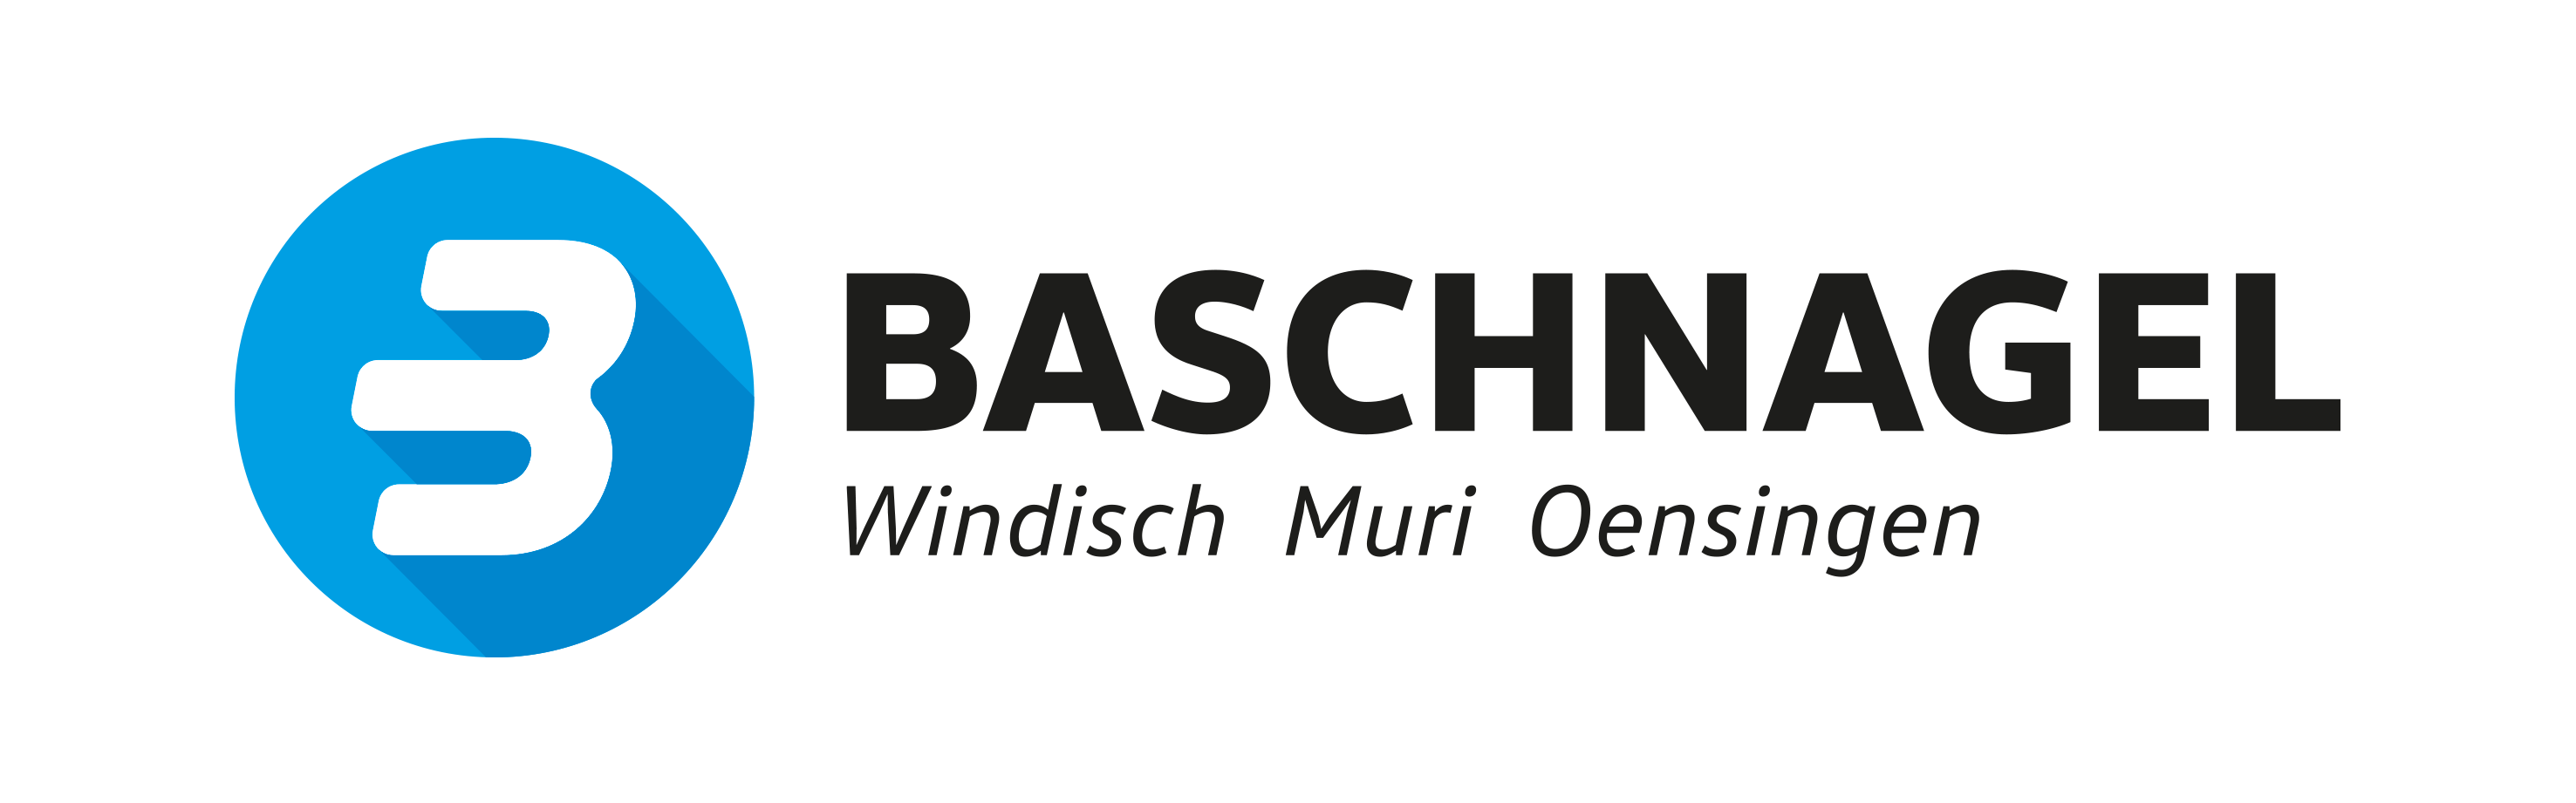 Baschnagel Webshop